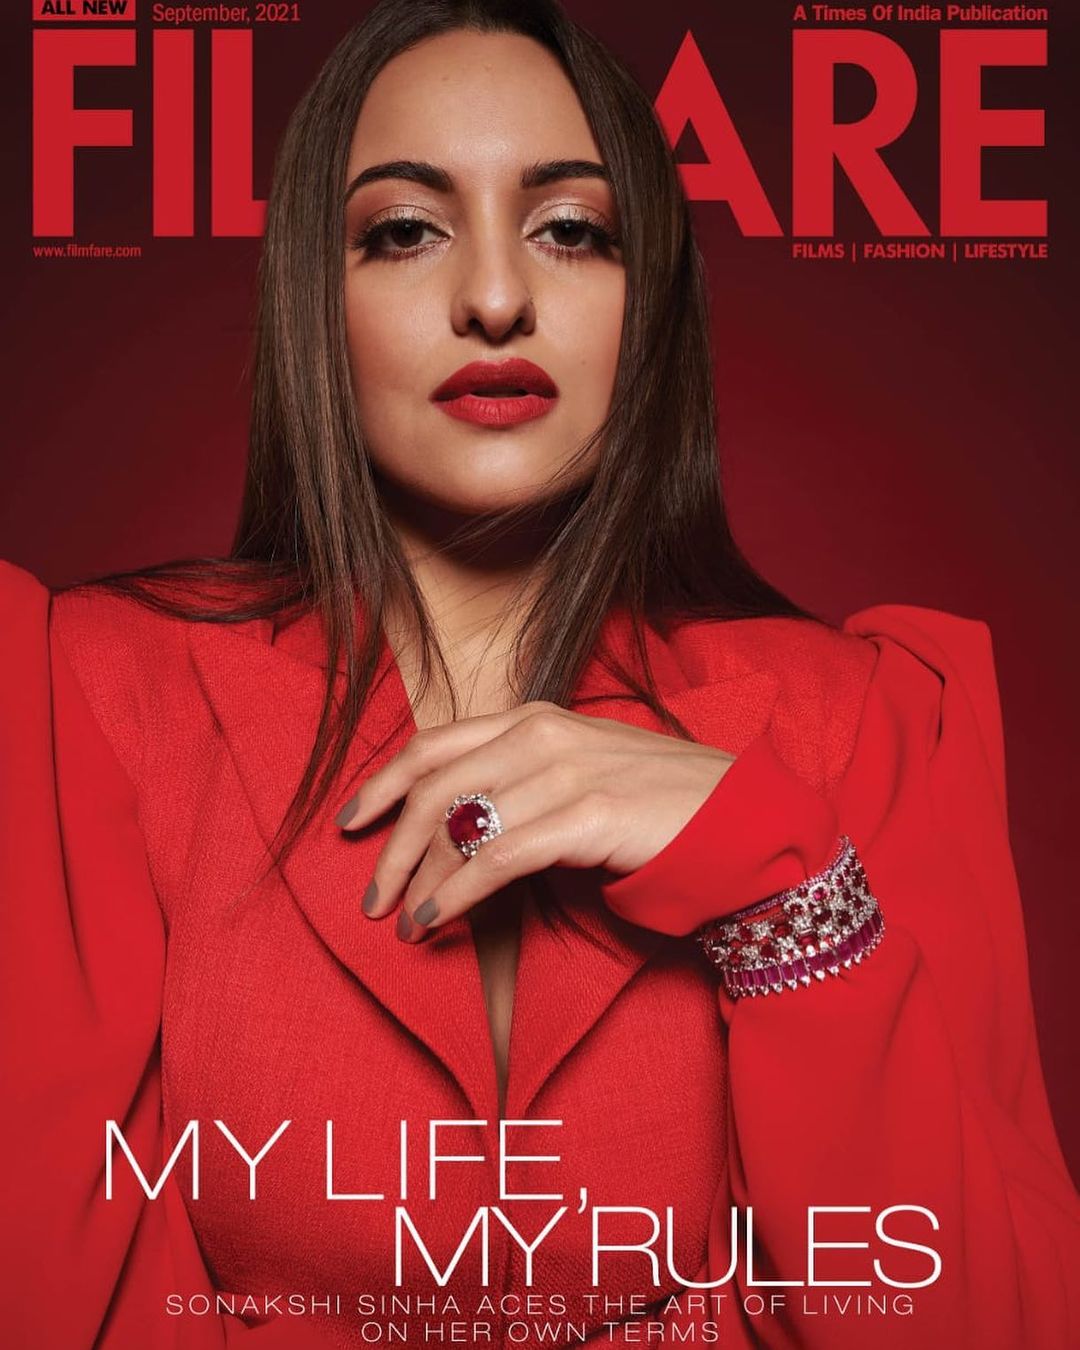 Sonakshi Sinha looks powerful in the red blazer. 